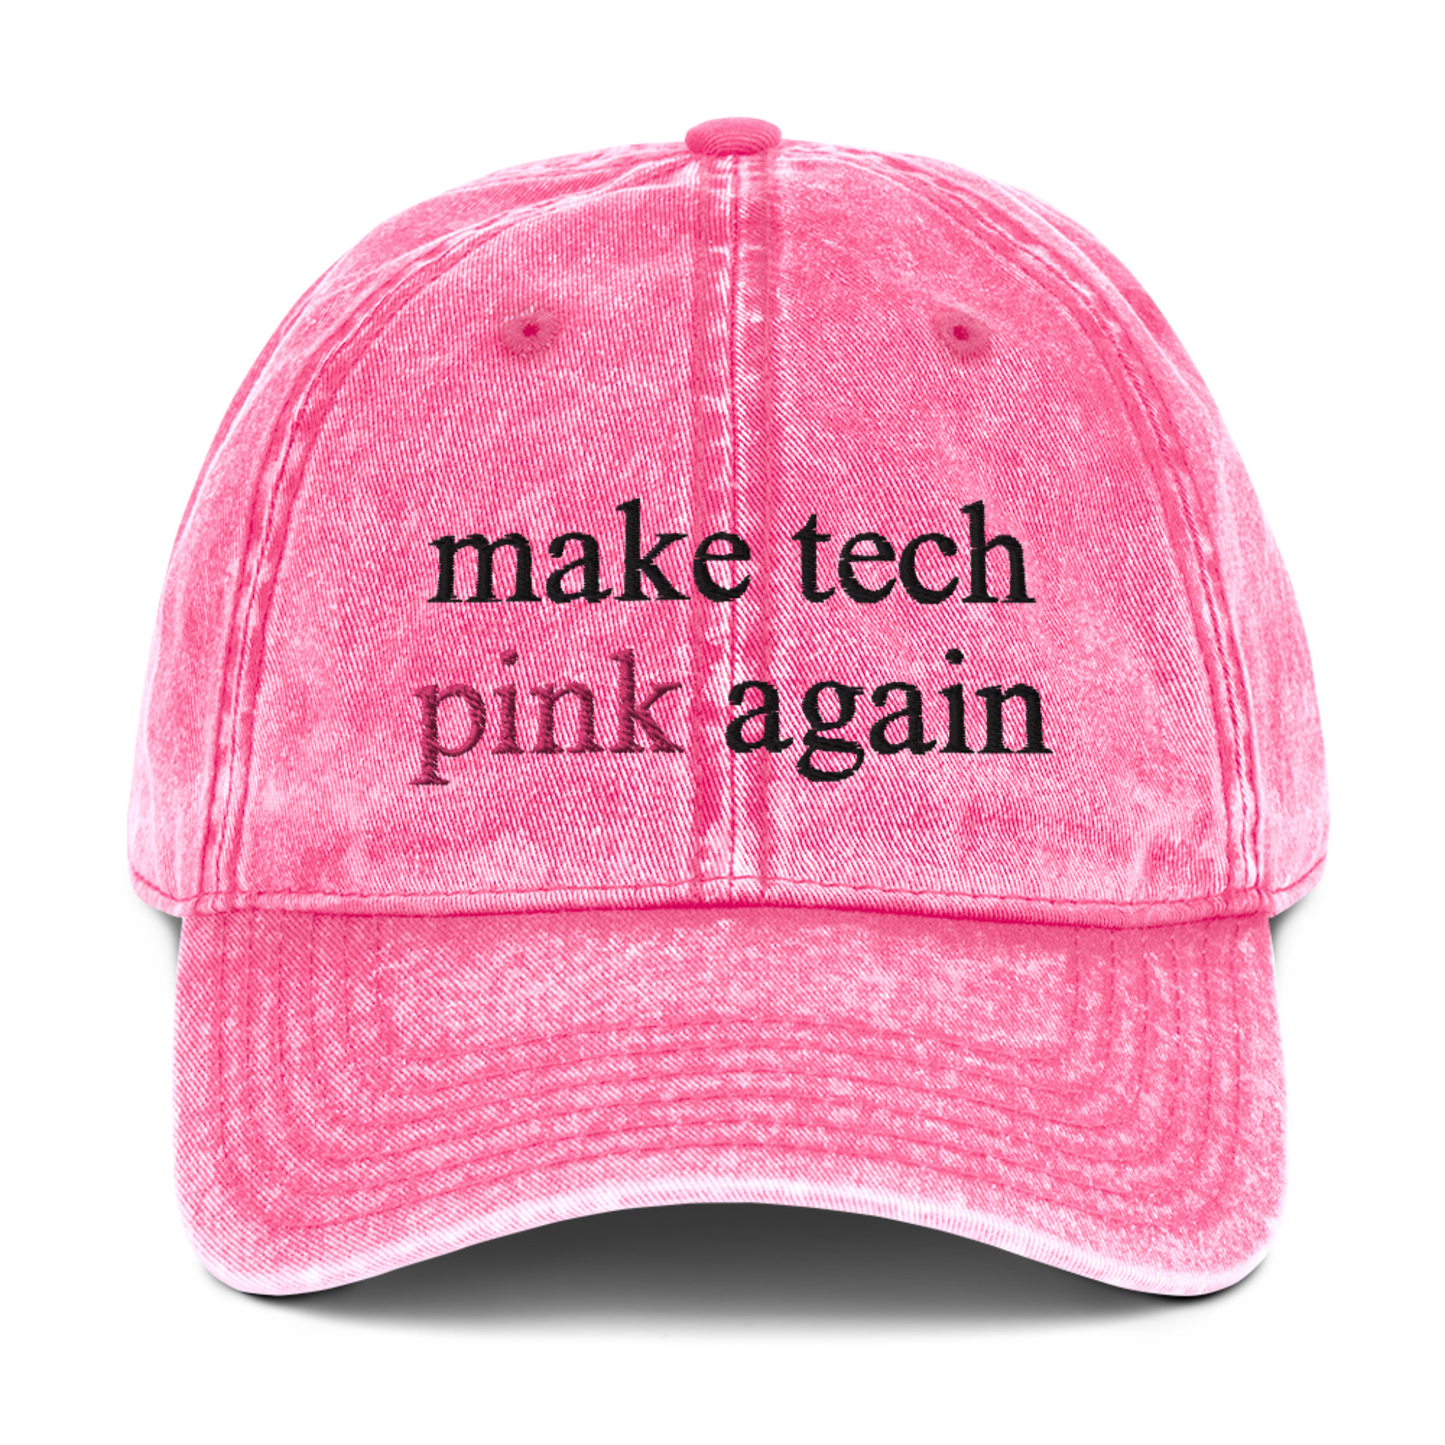 'Make Tech Pink Again' Denim Hat in Pink